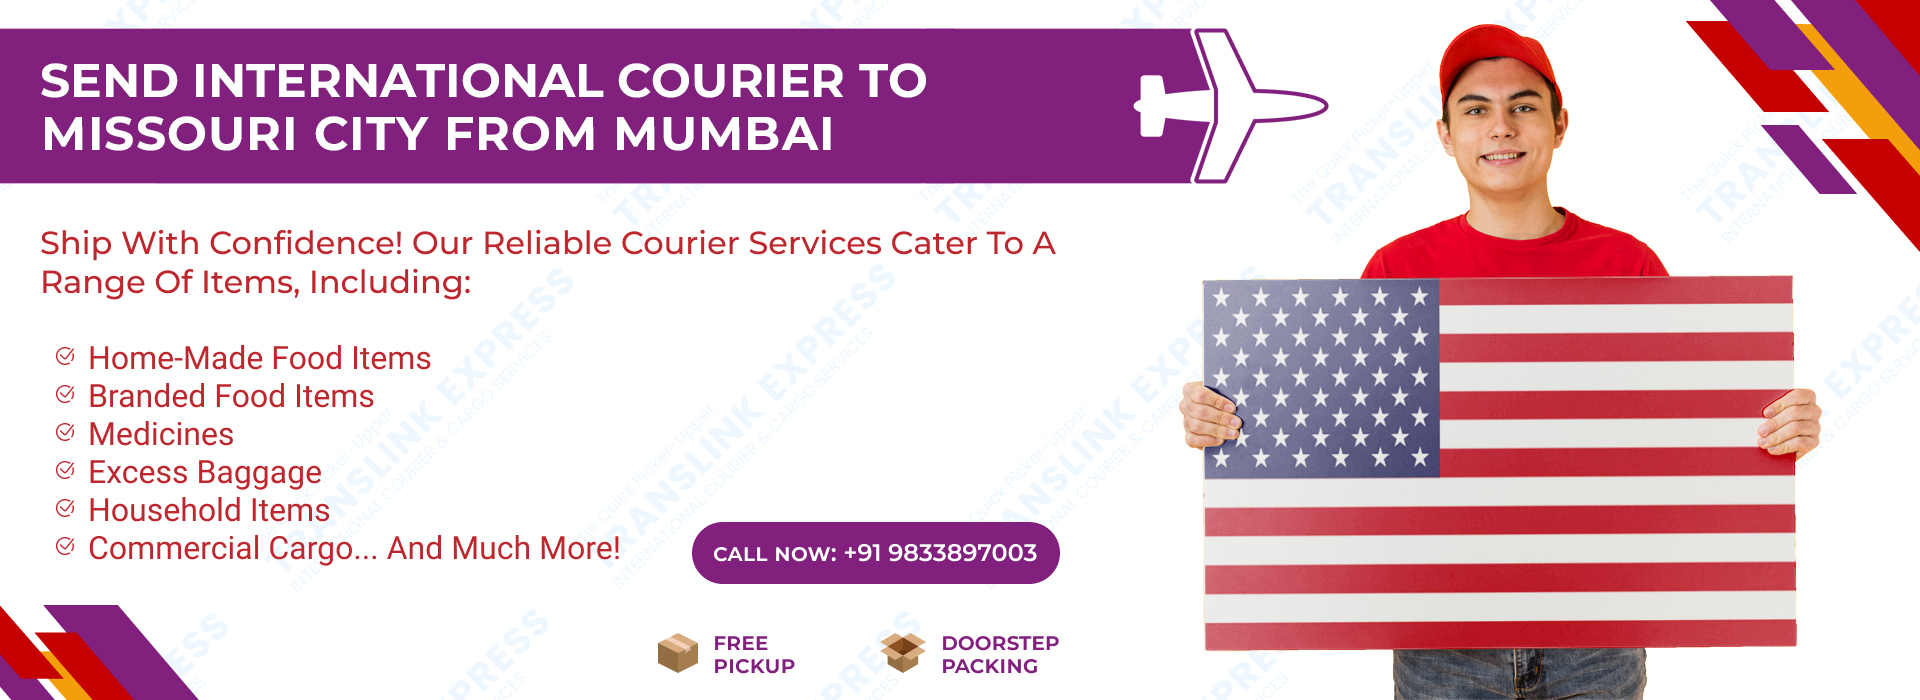 Courier to Missouri City From Mumbai